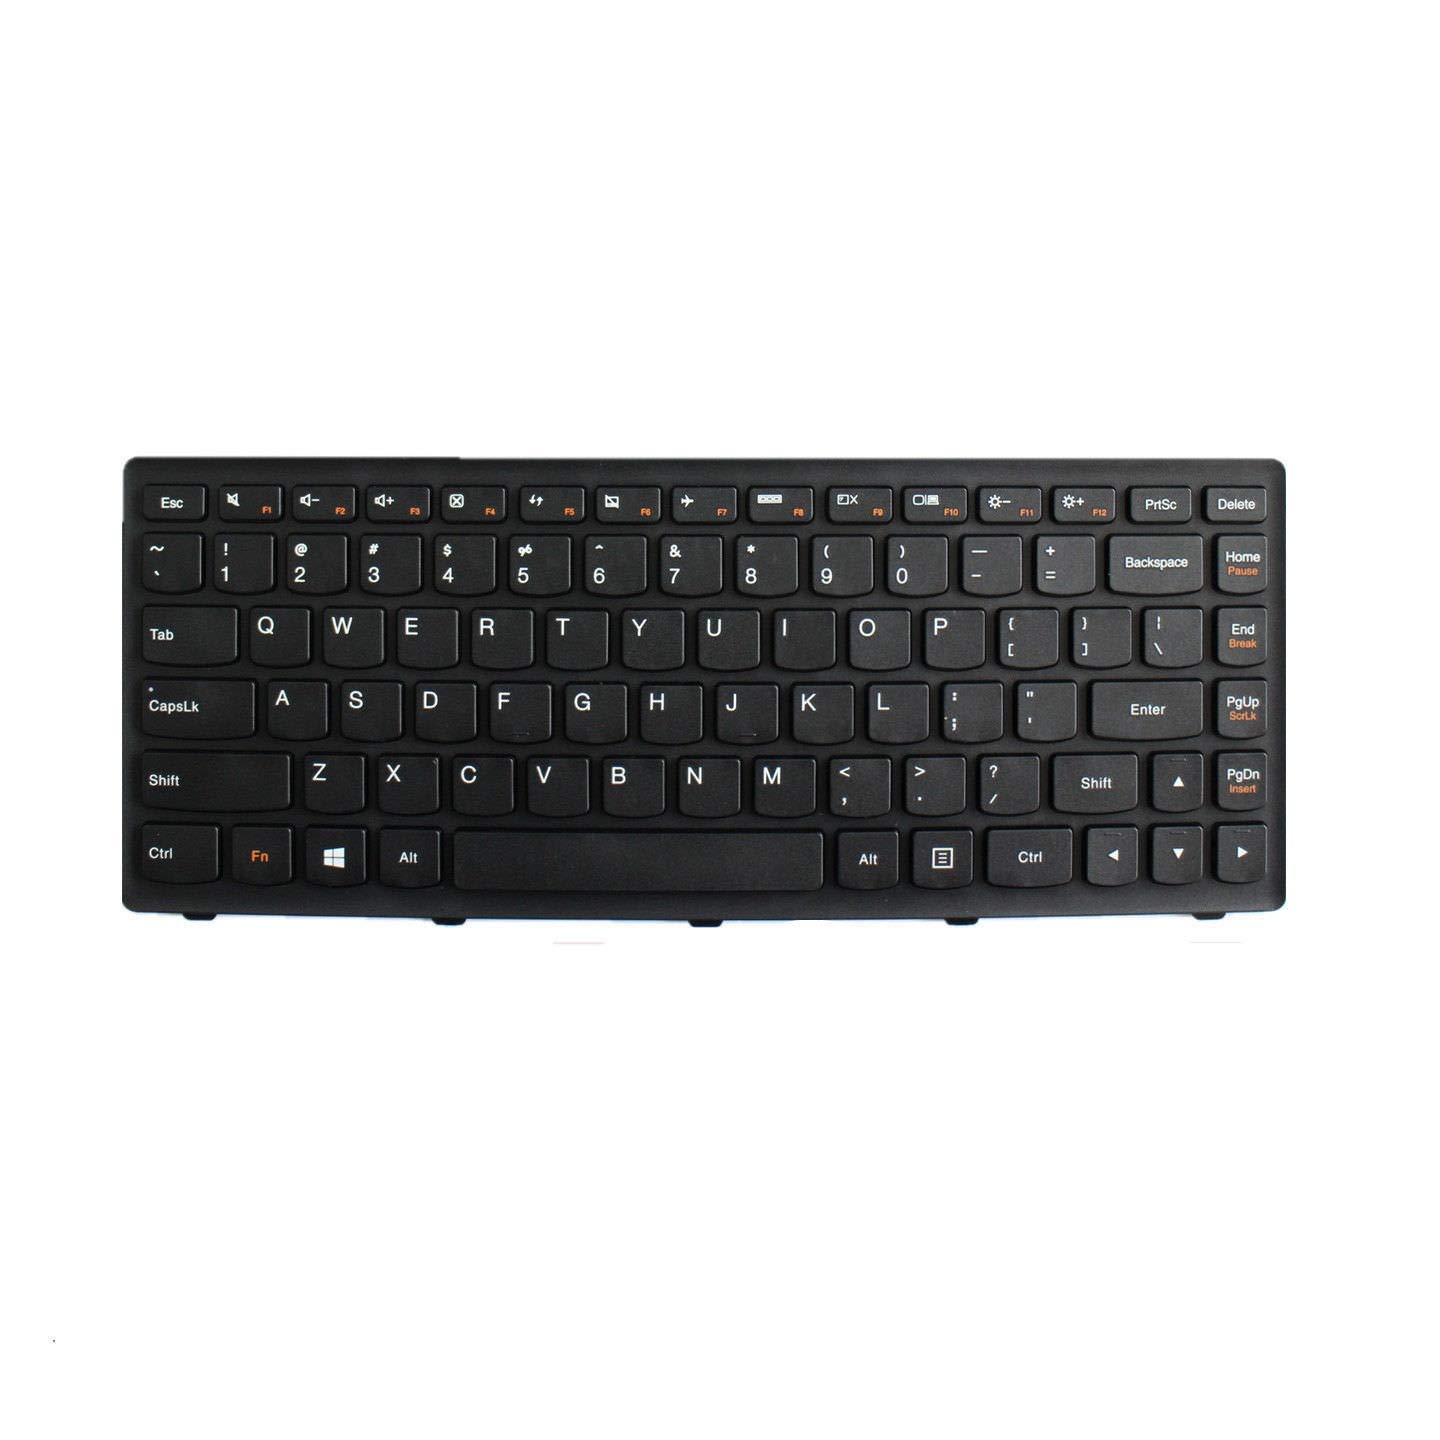 Wistar Laptop Keyboard Compatible for Lenovo G400S V-142920AS1-US AEST6U00210 MP-12U93US-6861 NSK-BLLSW NSK-BLFSQ